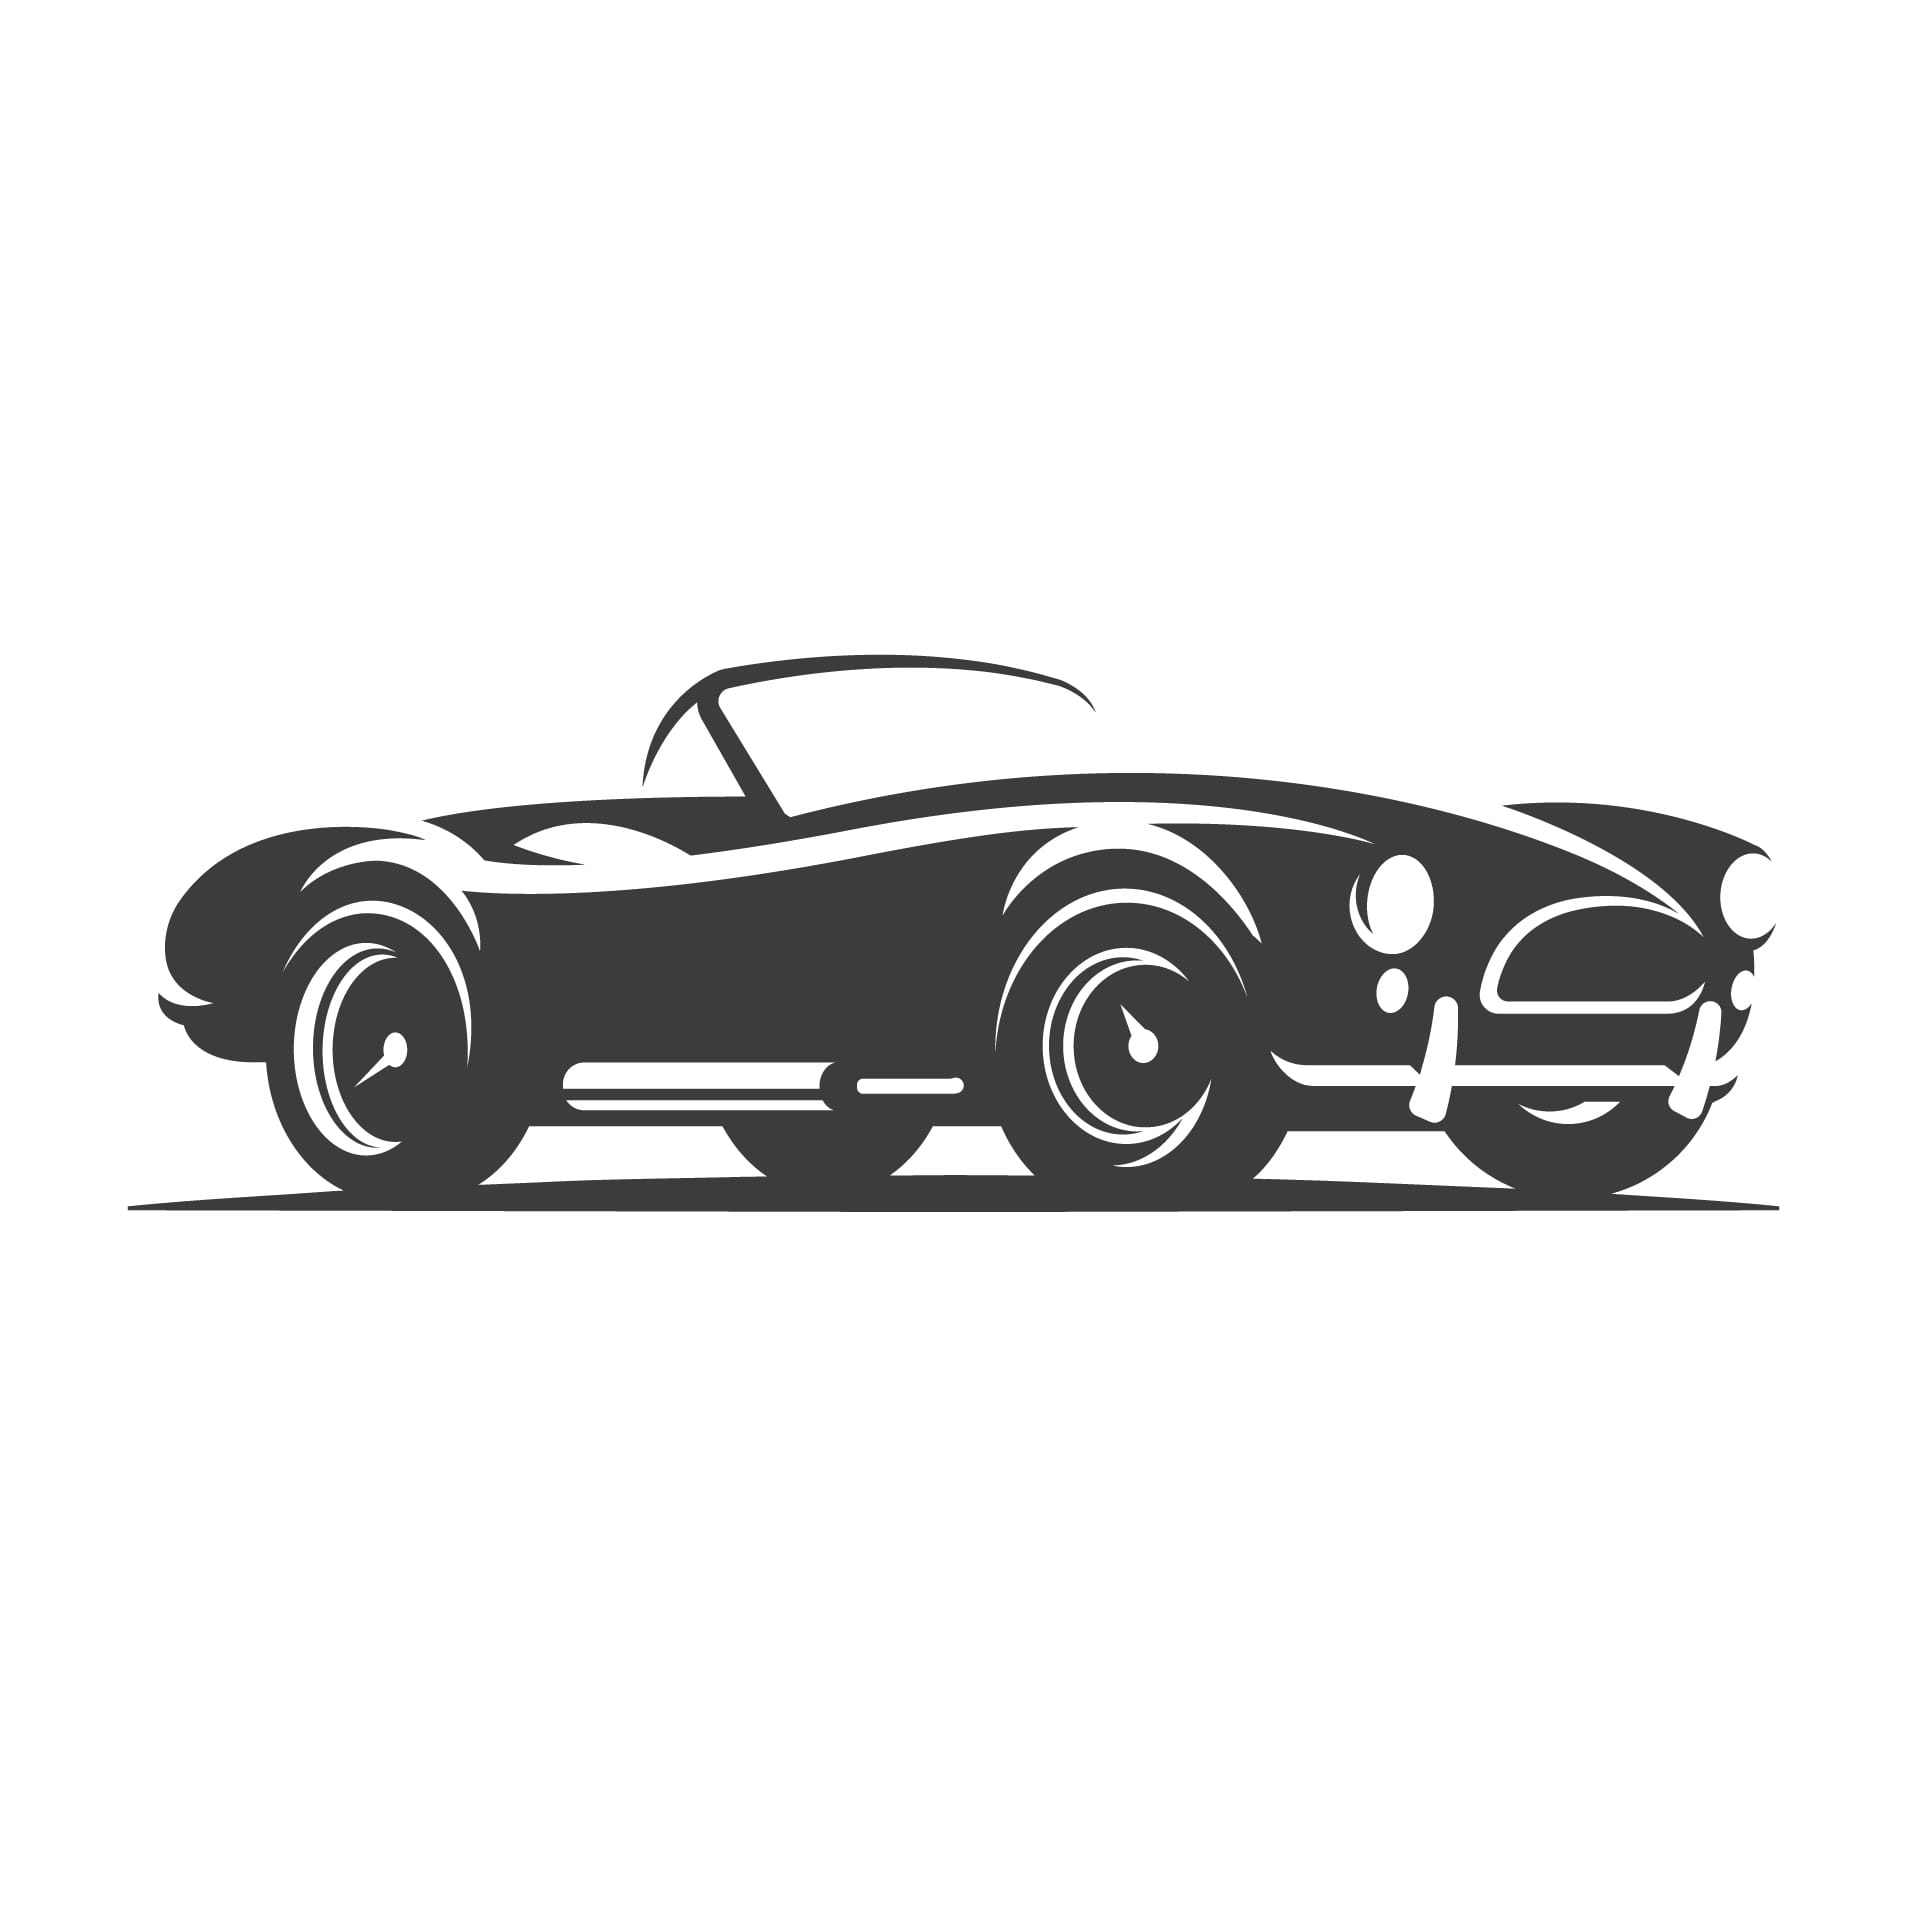 Retro car roadster illustration image car profile picture